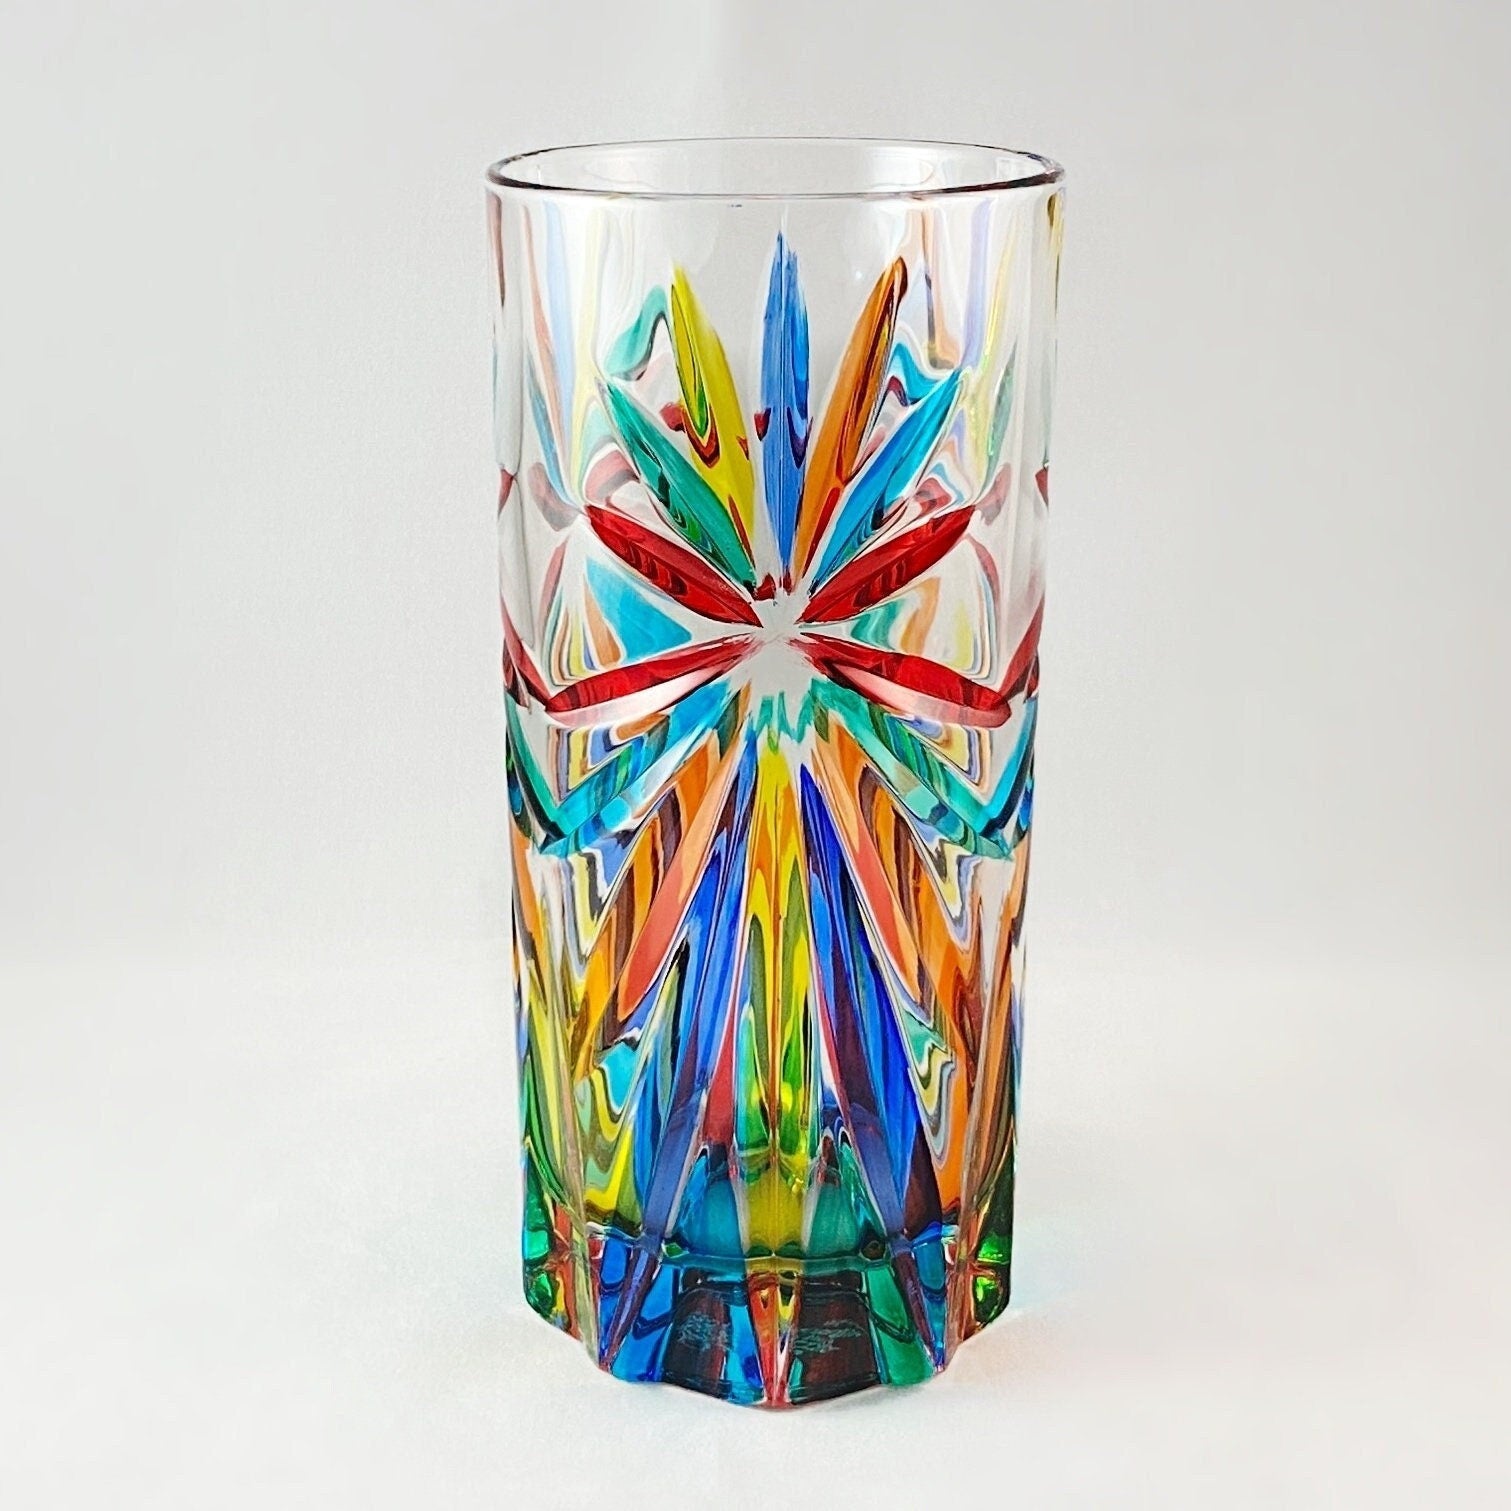 Tall Venetian Glass Oasis Highball Glass - Handmade in Italy, Colorful Murano Glass